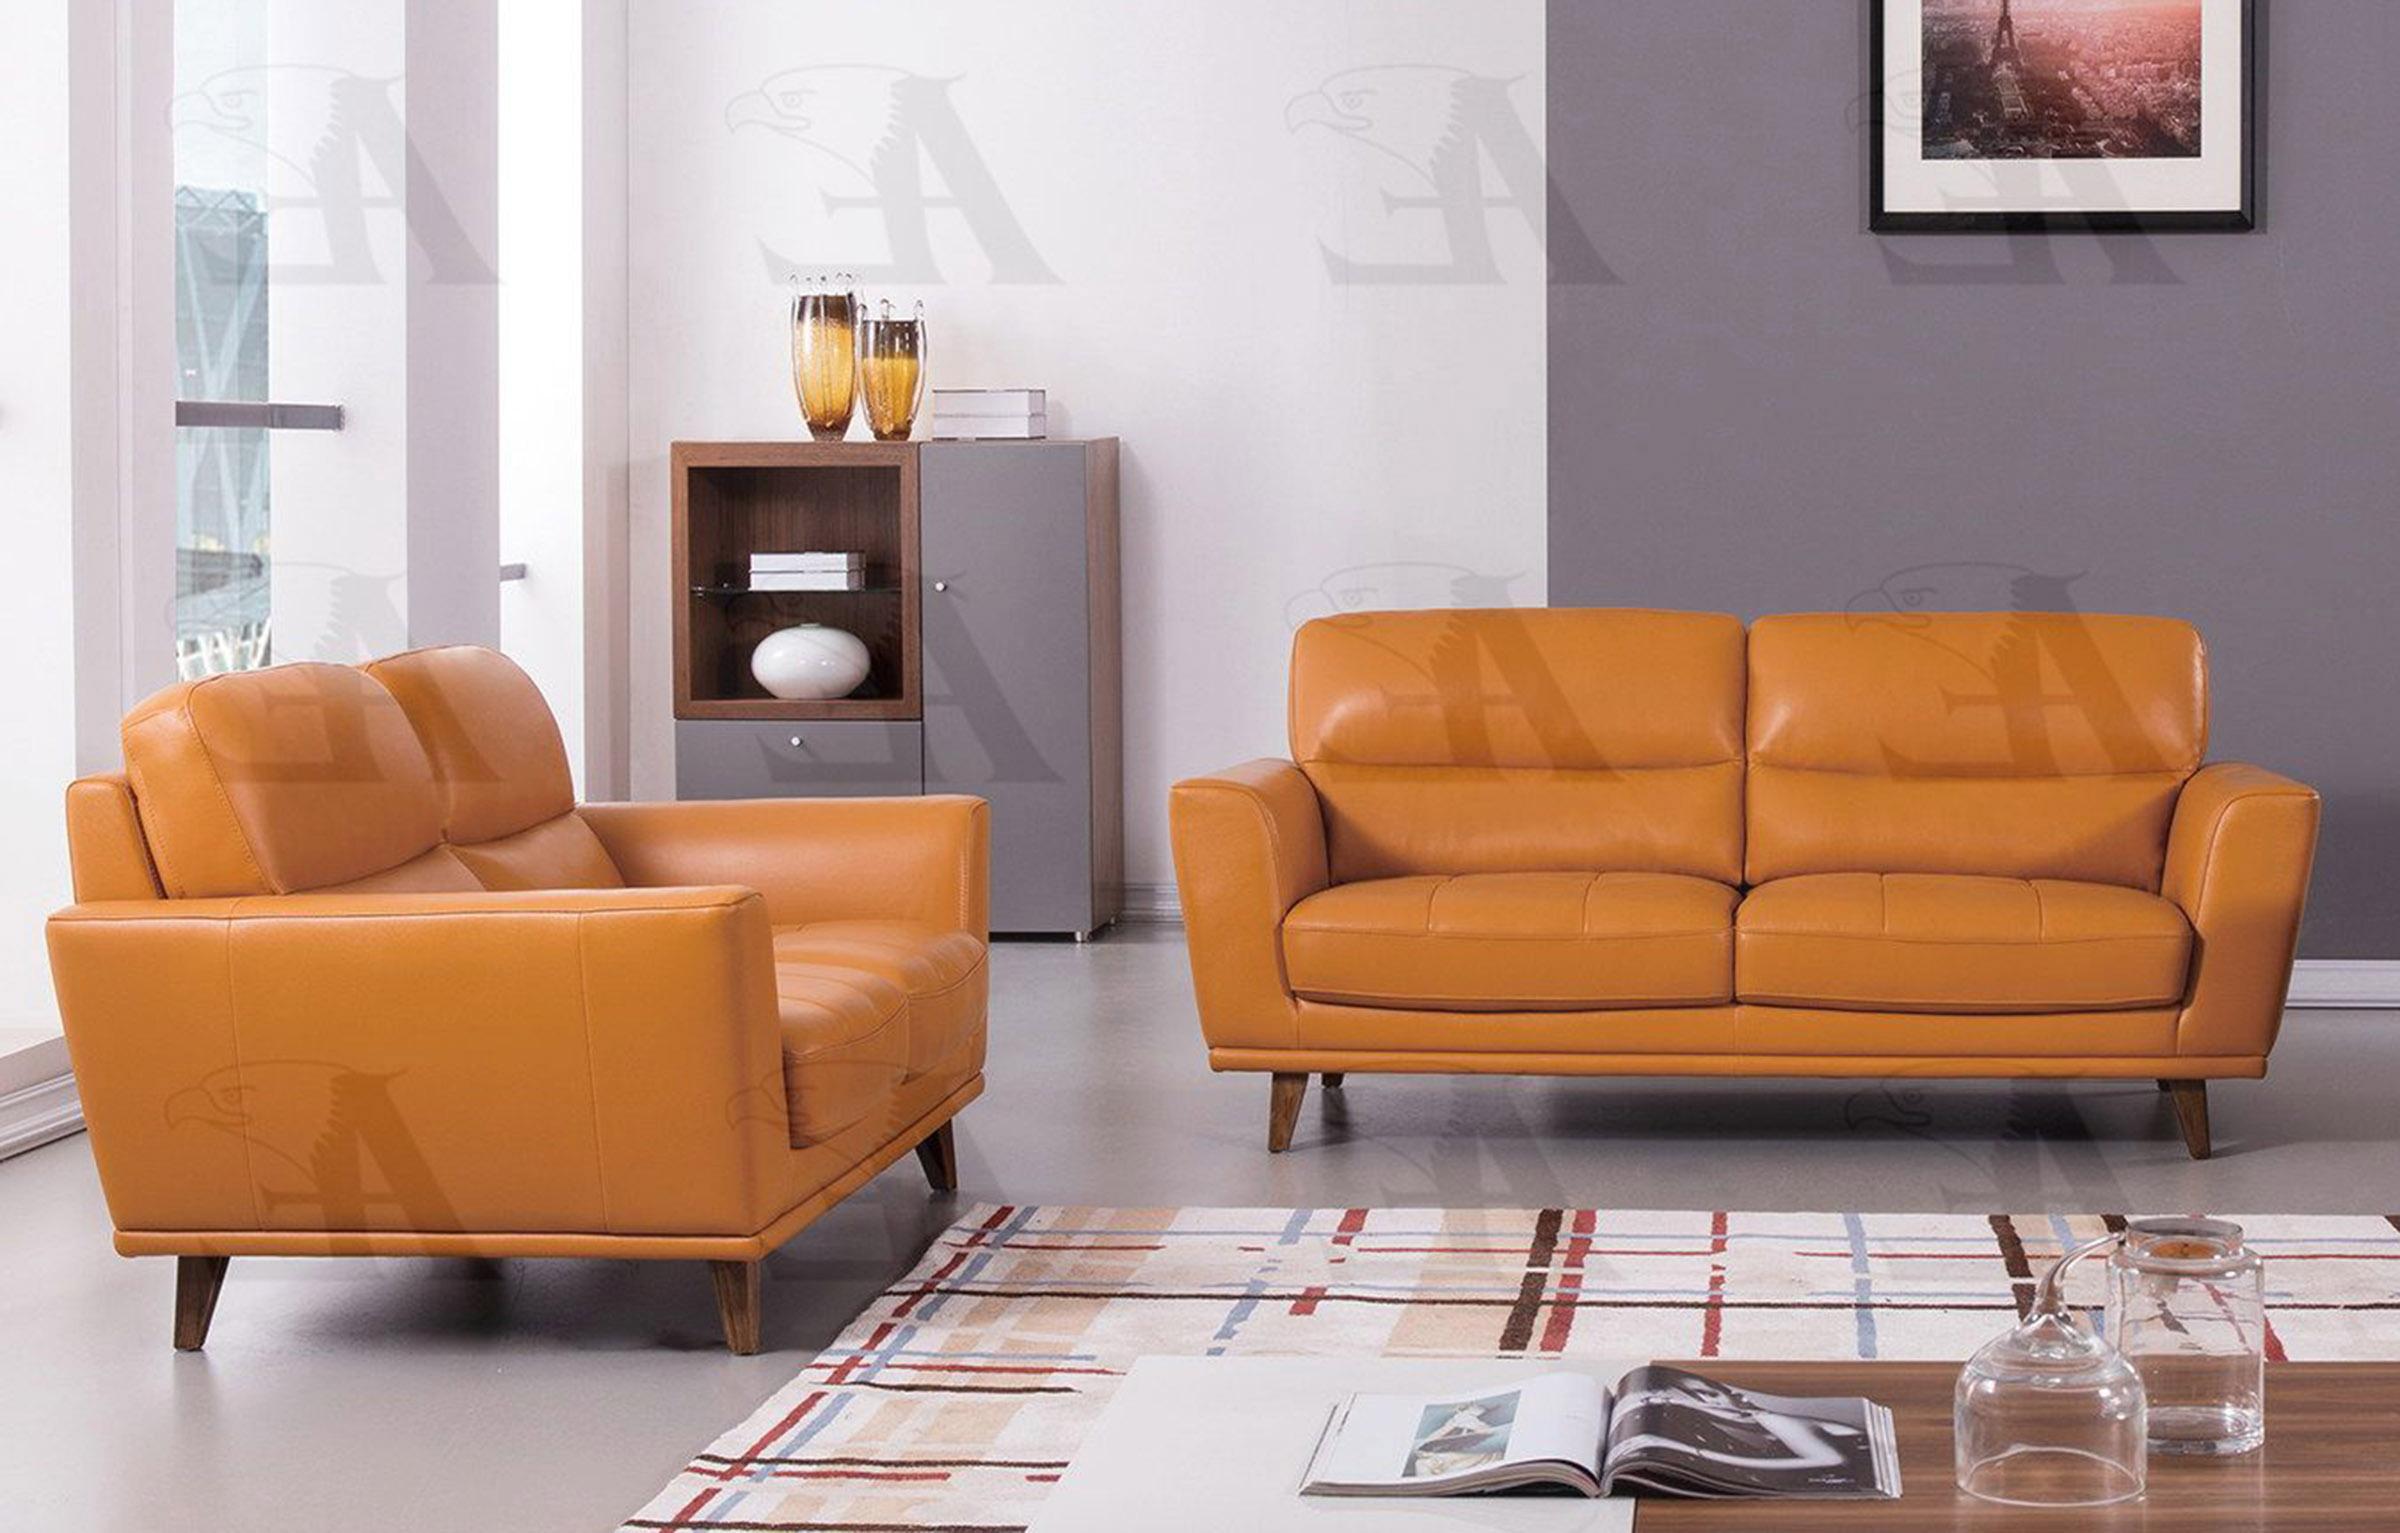 

    
American Eagle Furniture EK082-ORG Orange Sofa and Loveseat Set Italian Leather 2Pcs
